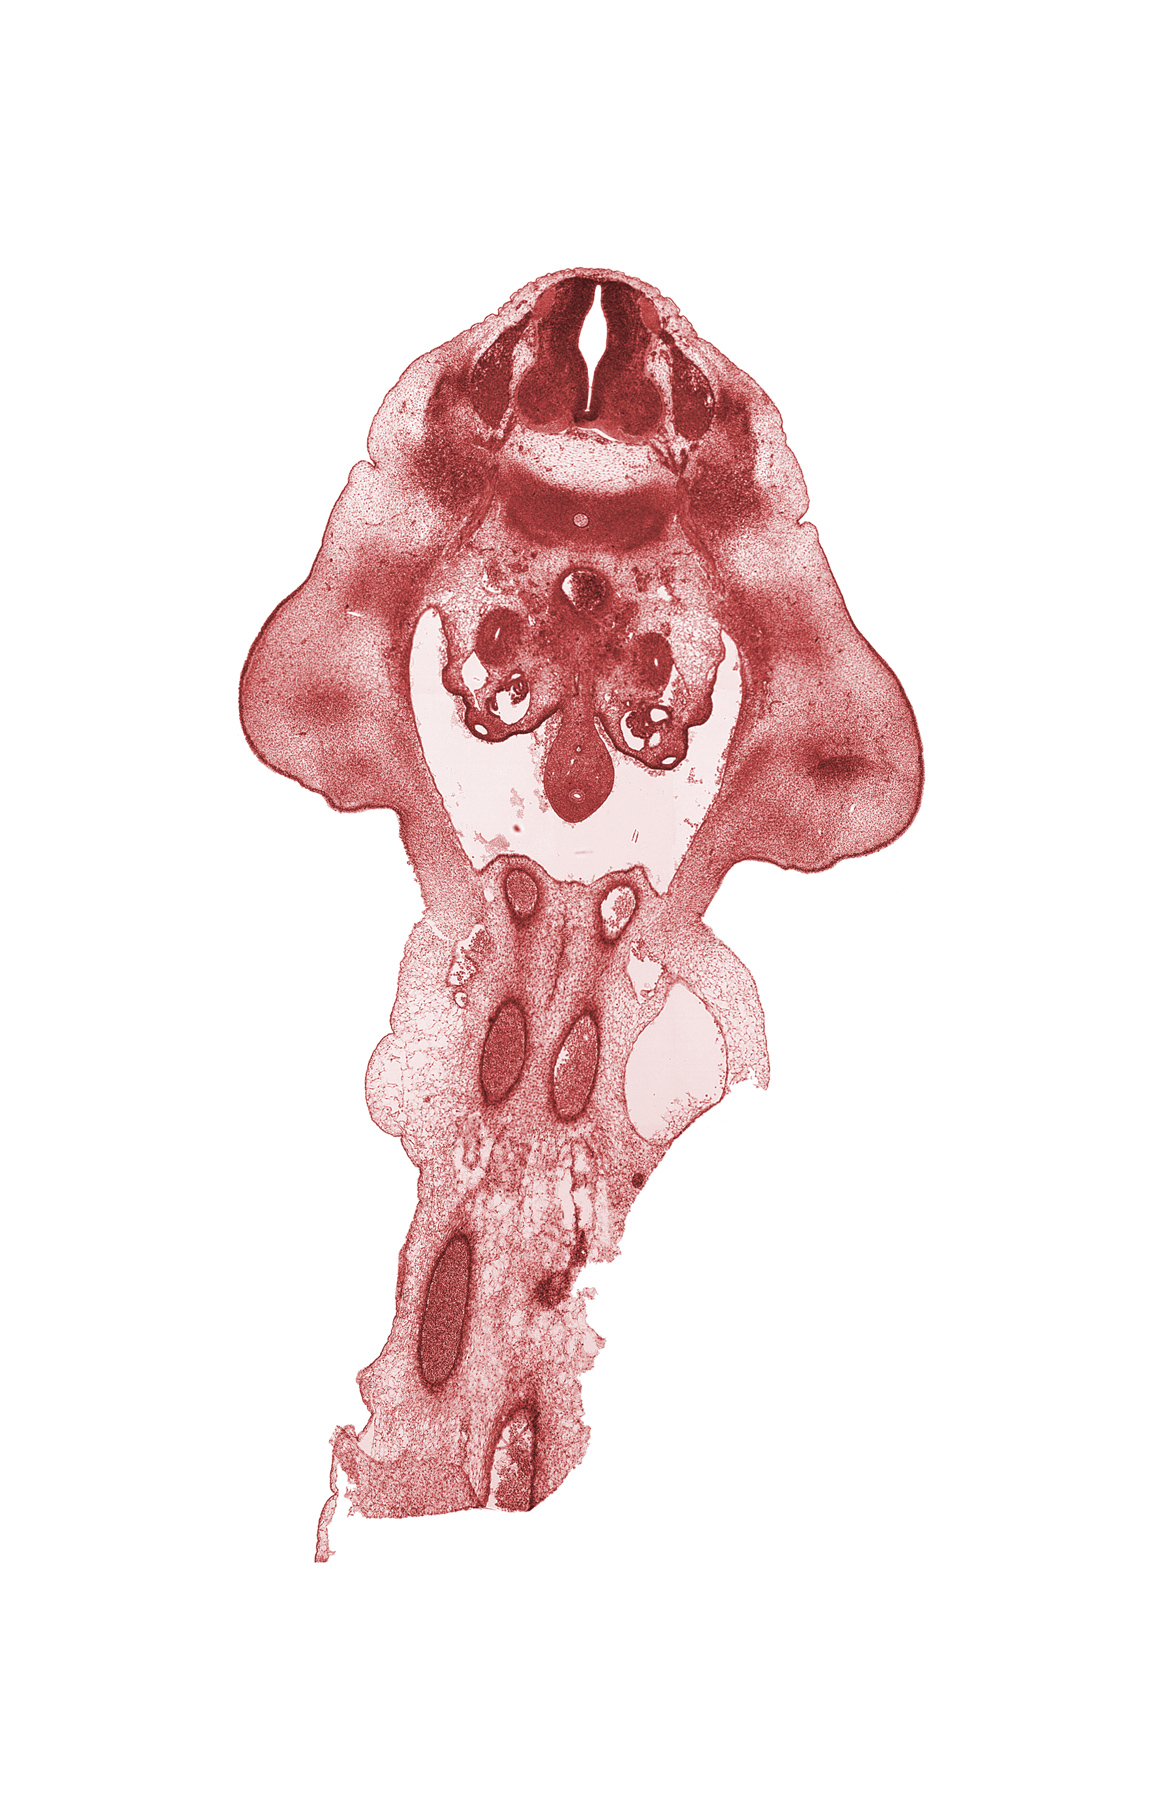 L-2 spinal ganglion, aorta, edge of allantois, hindgut, inferior mesenteric artery, left umbilical artery, metanephrogenic blastema, missing tissue (artifact), pelvis of kidney (metanephros), peritoneal cavity, right umbilical artery, thigh